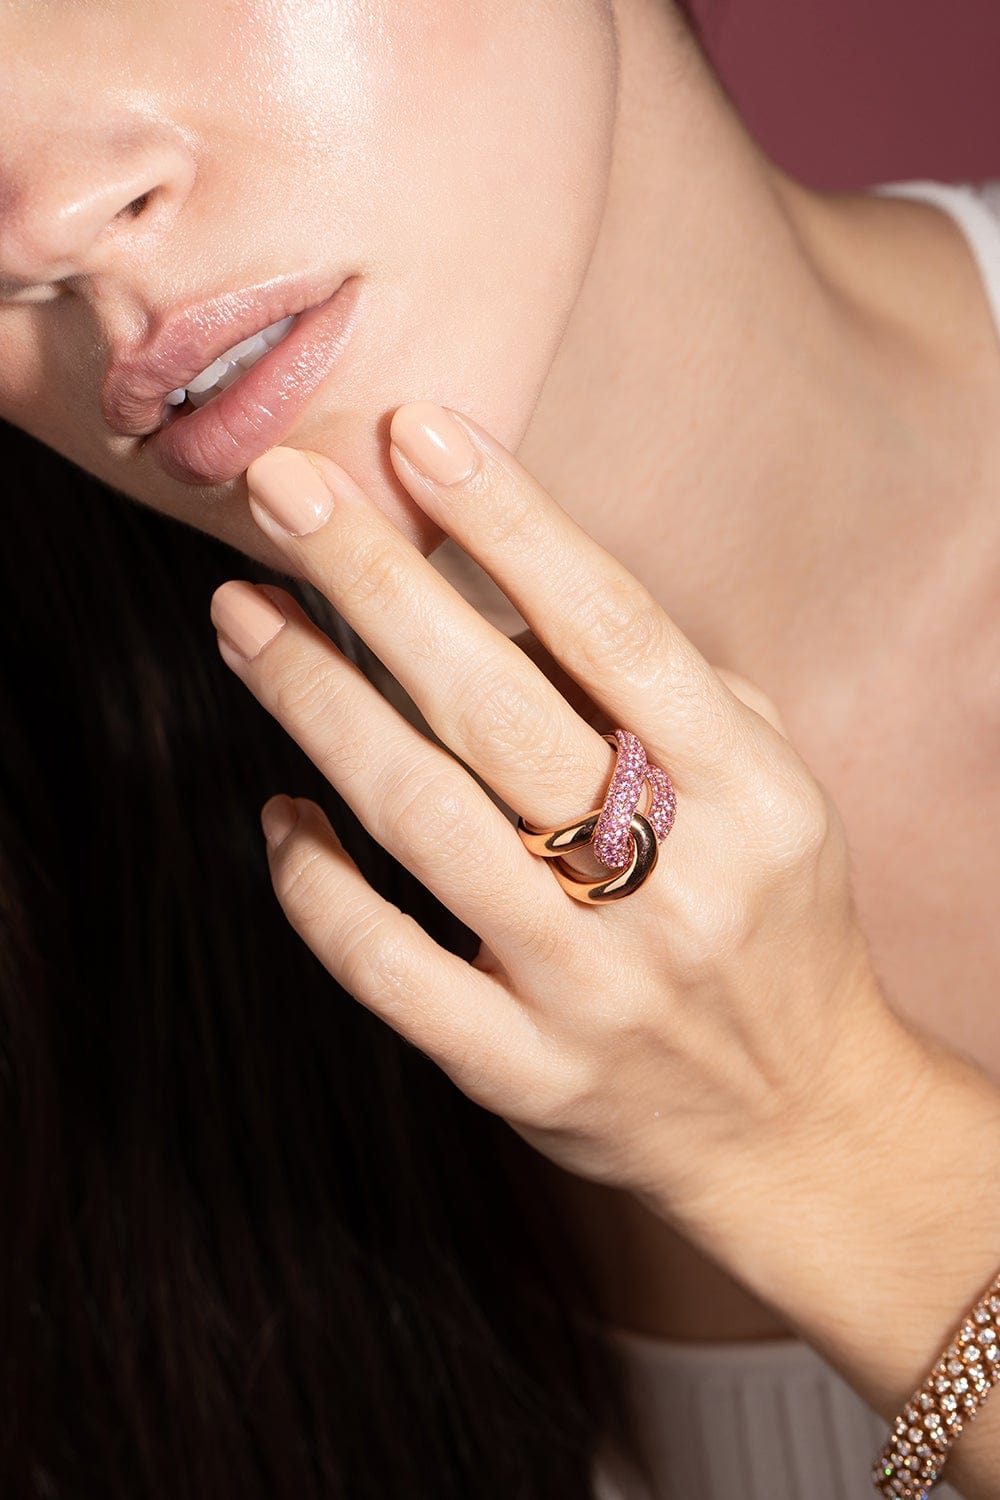 GEMELLA JEWELS-Pink Sapphire Intertwin Ring-ROSE GOLD